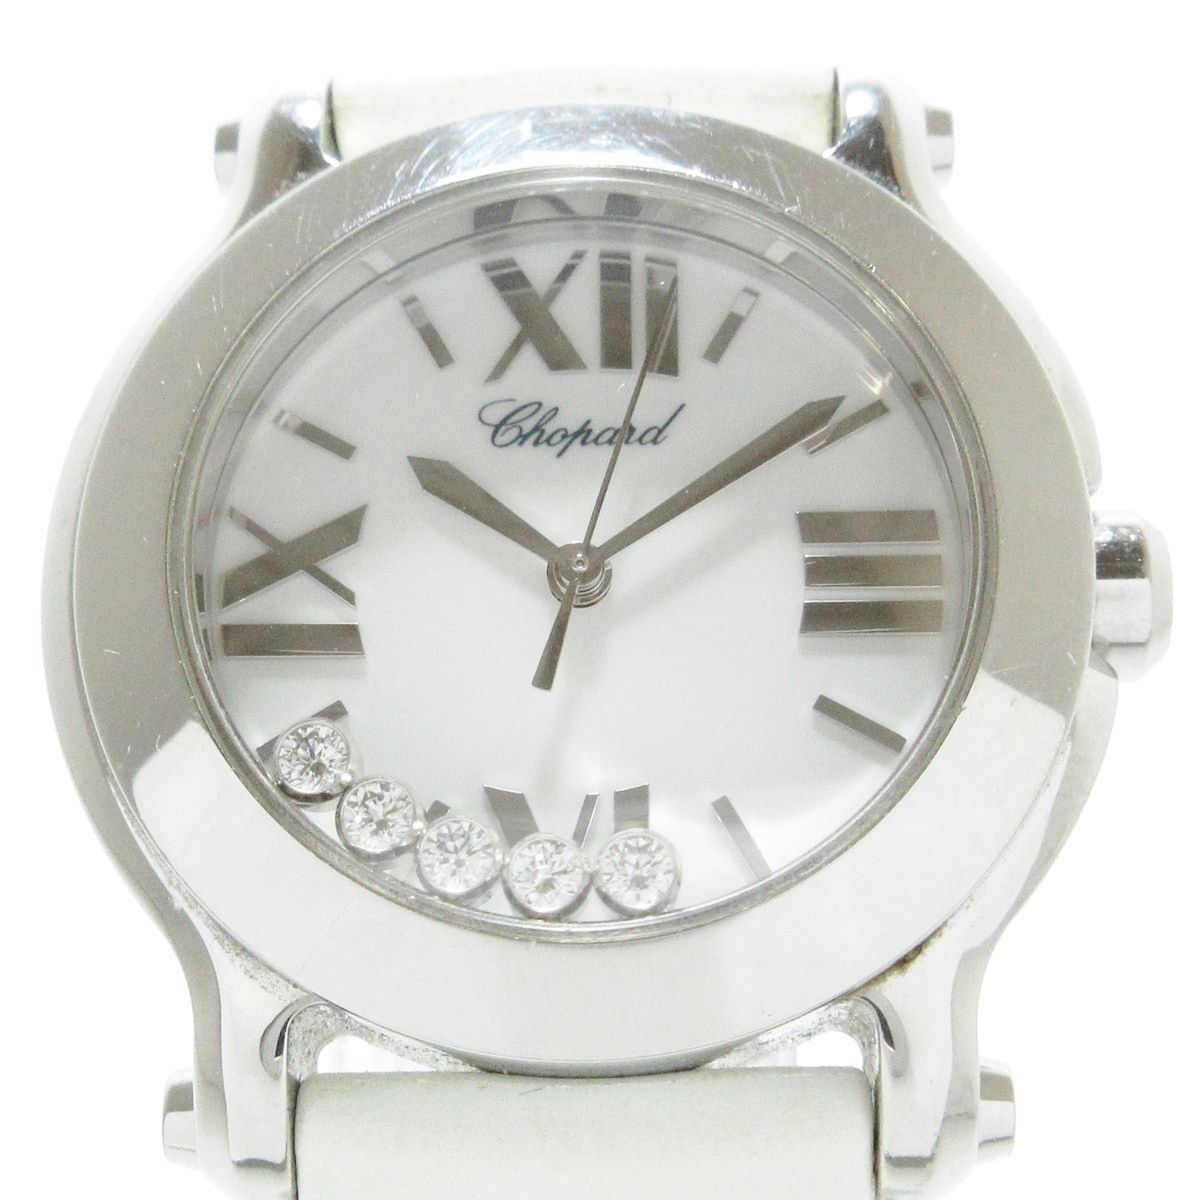 Chopard(ショパール) 腕時計 ハッピースポーツマーク2 8509 レディース 